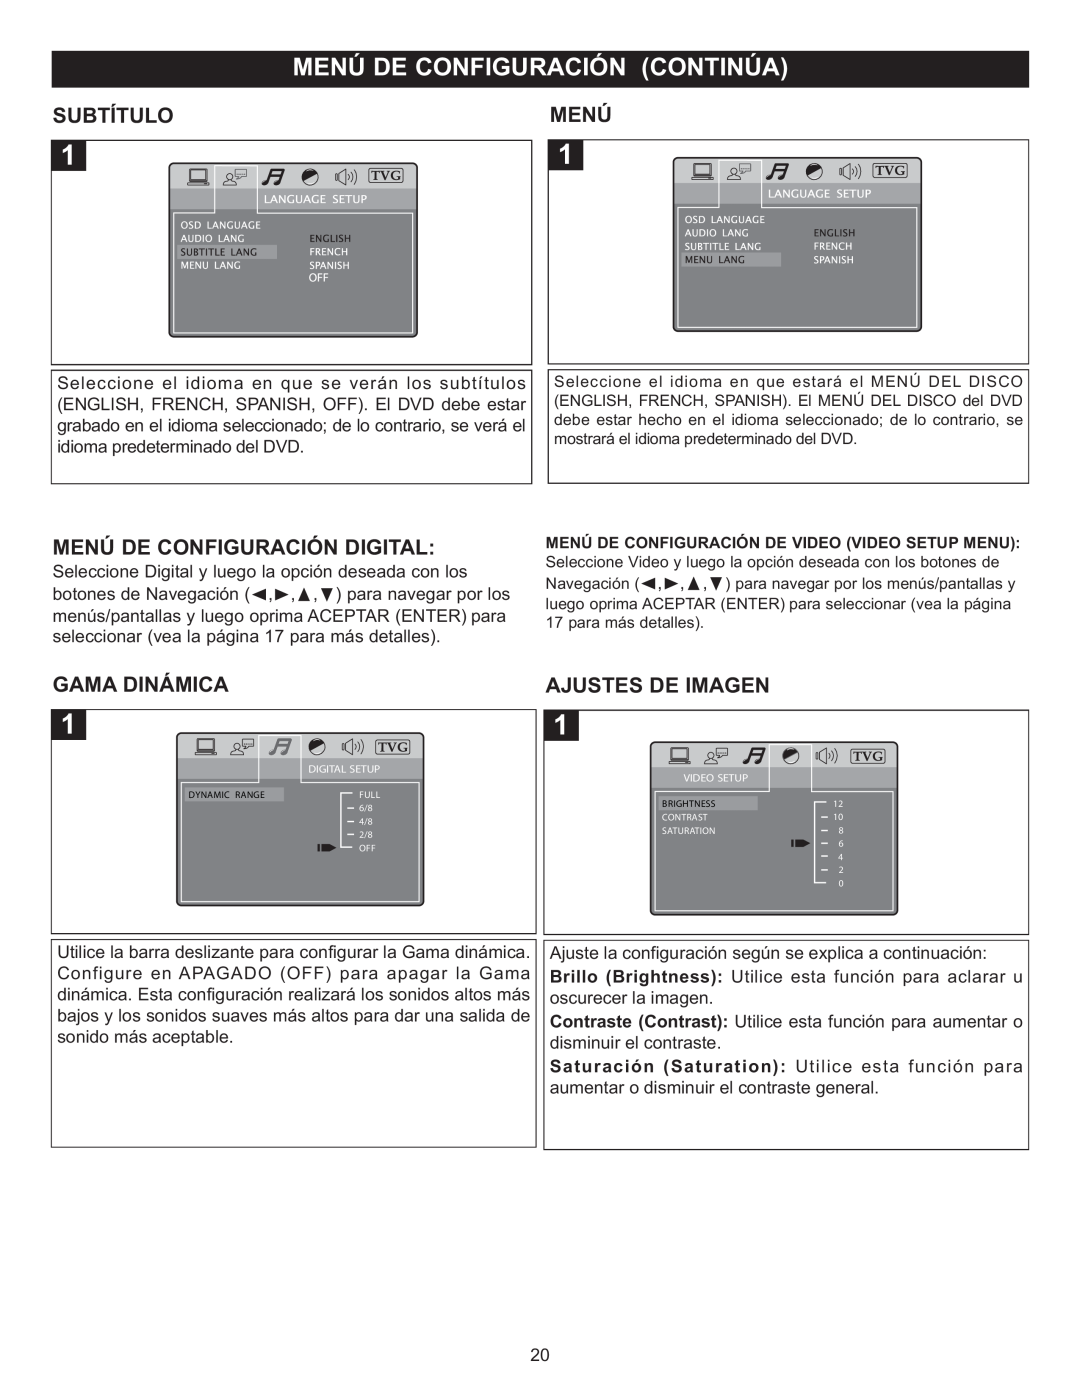 Memorex MIHT5005 manual Subtítulo, Menú, Gama Dinámica, Ajustes De Imagen 